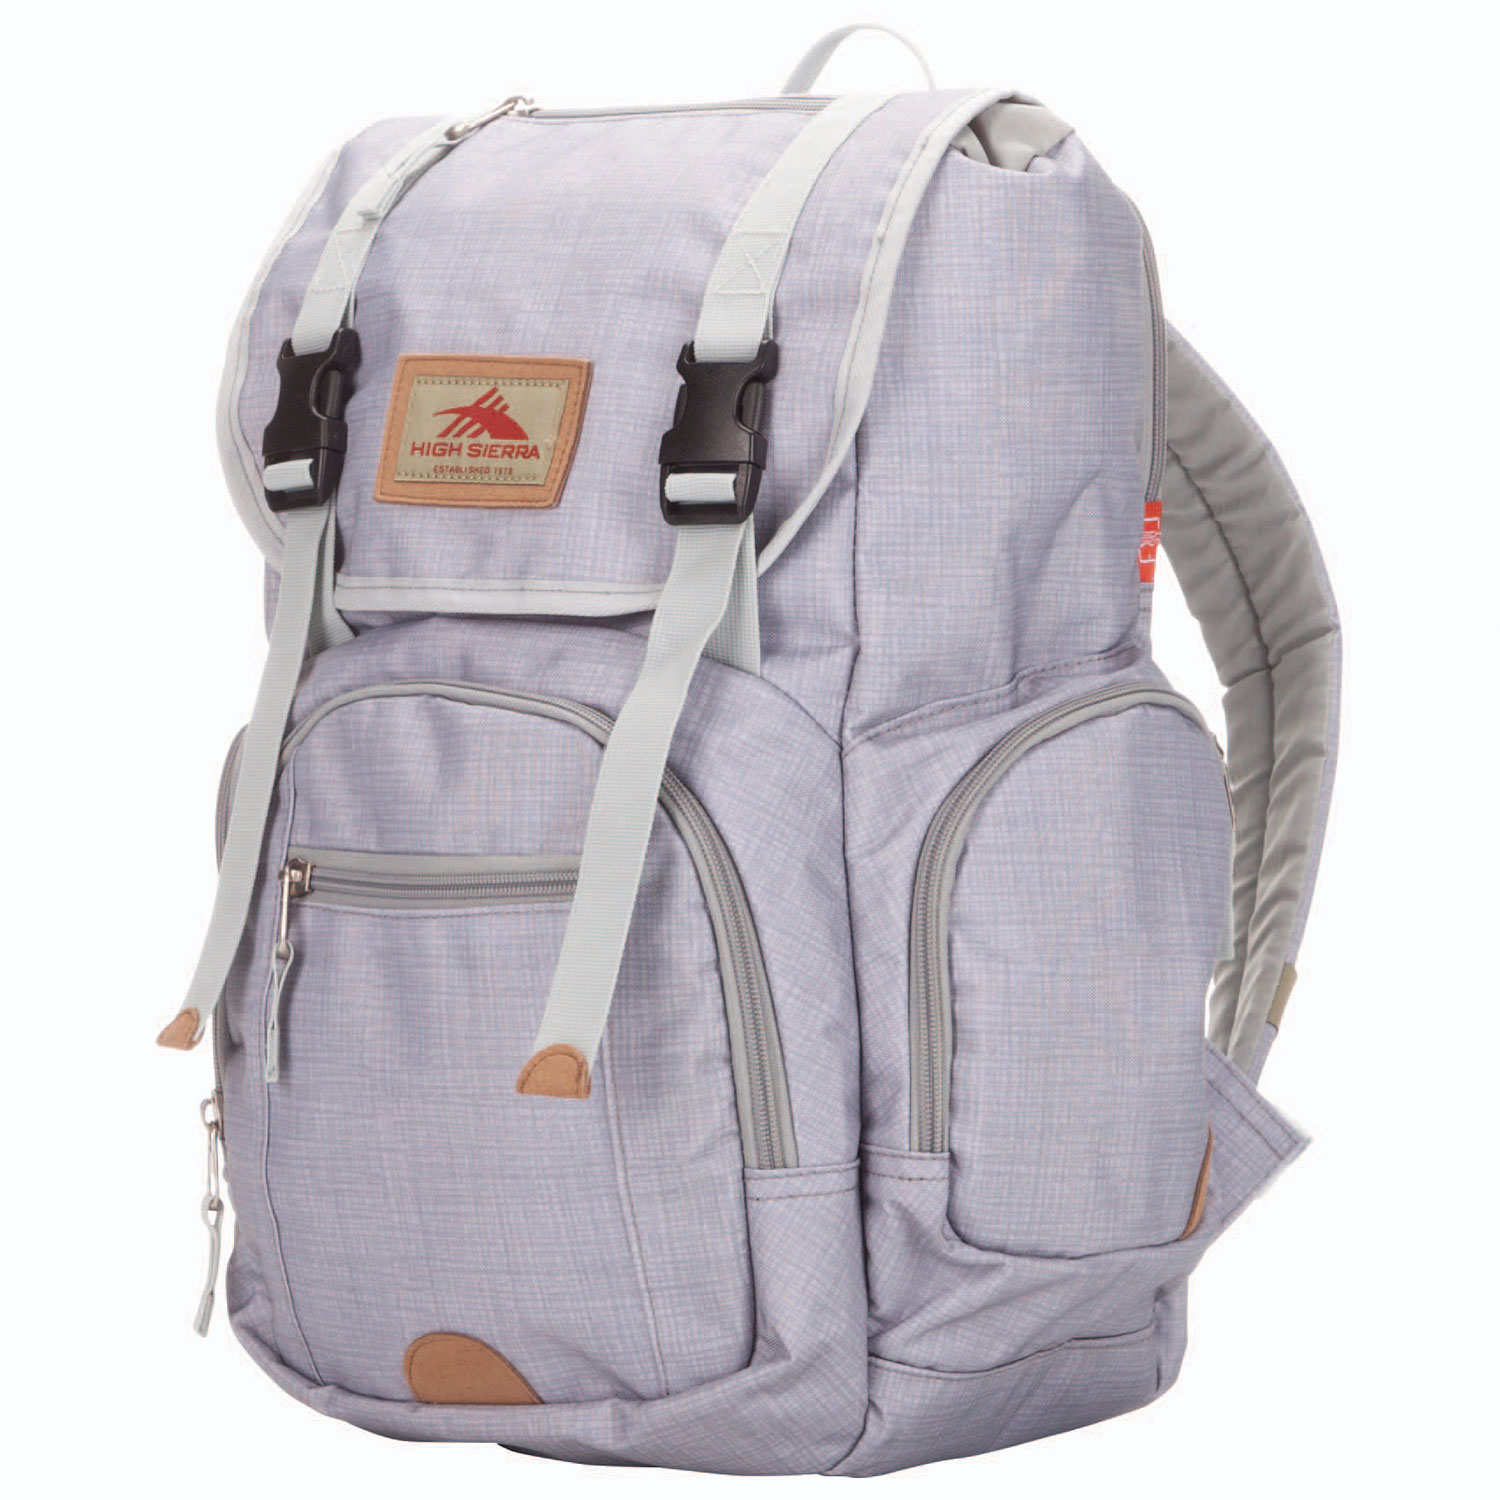 10 backpacks that impress - 10409043